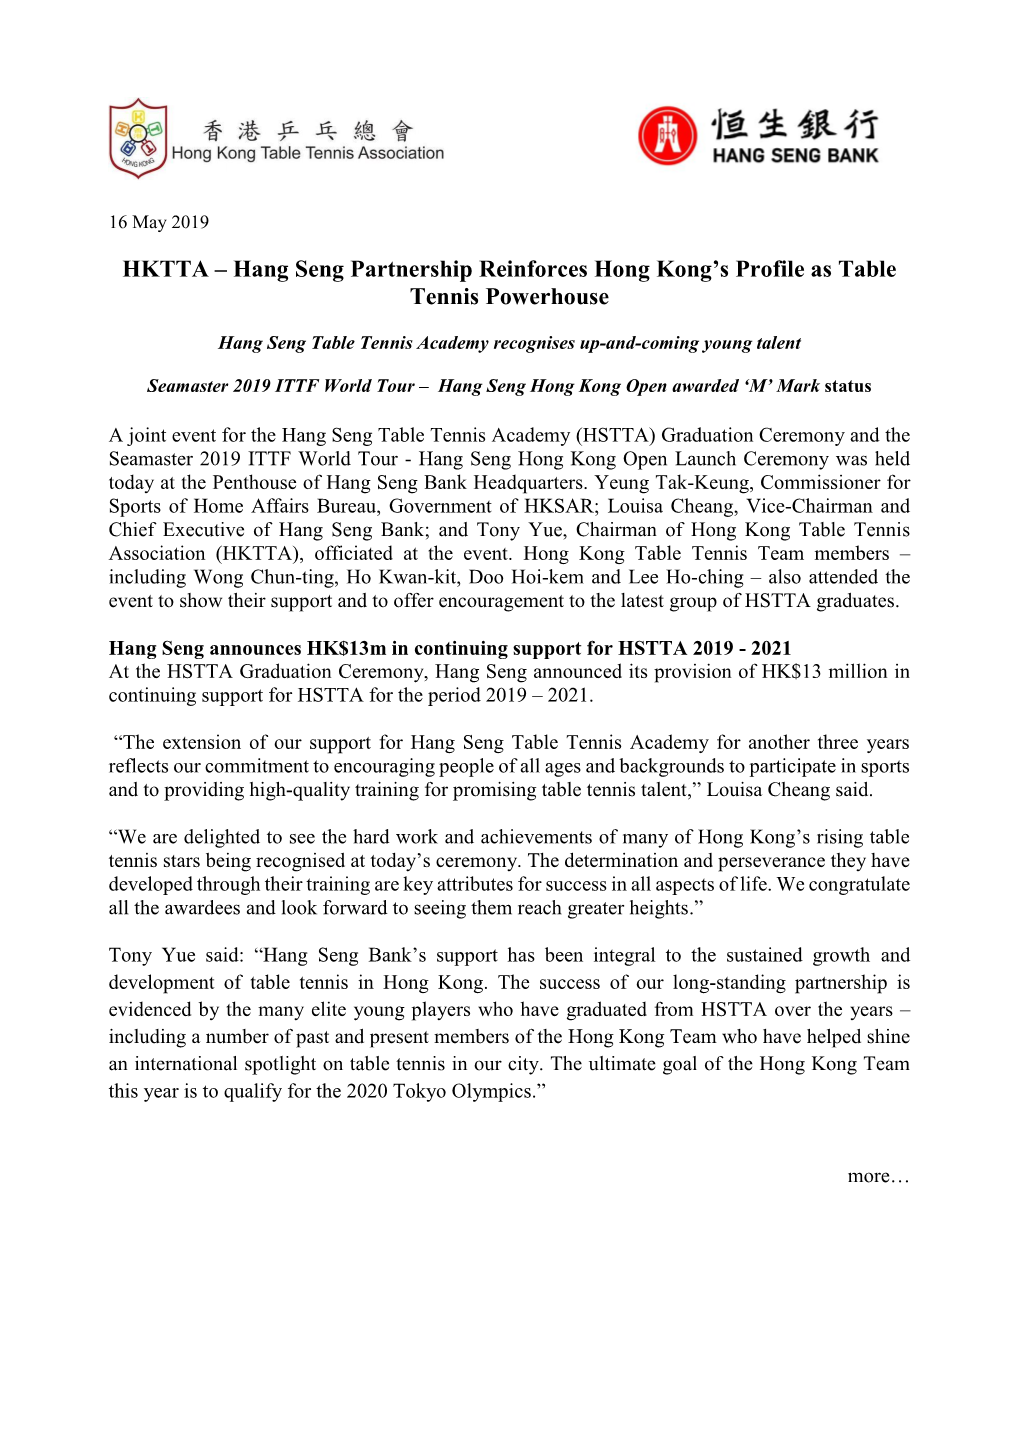 HKTTA – Hang Seng Partnership Reinforces Hong Kong's Profile As